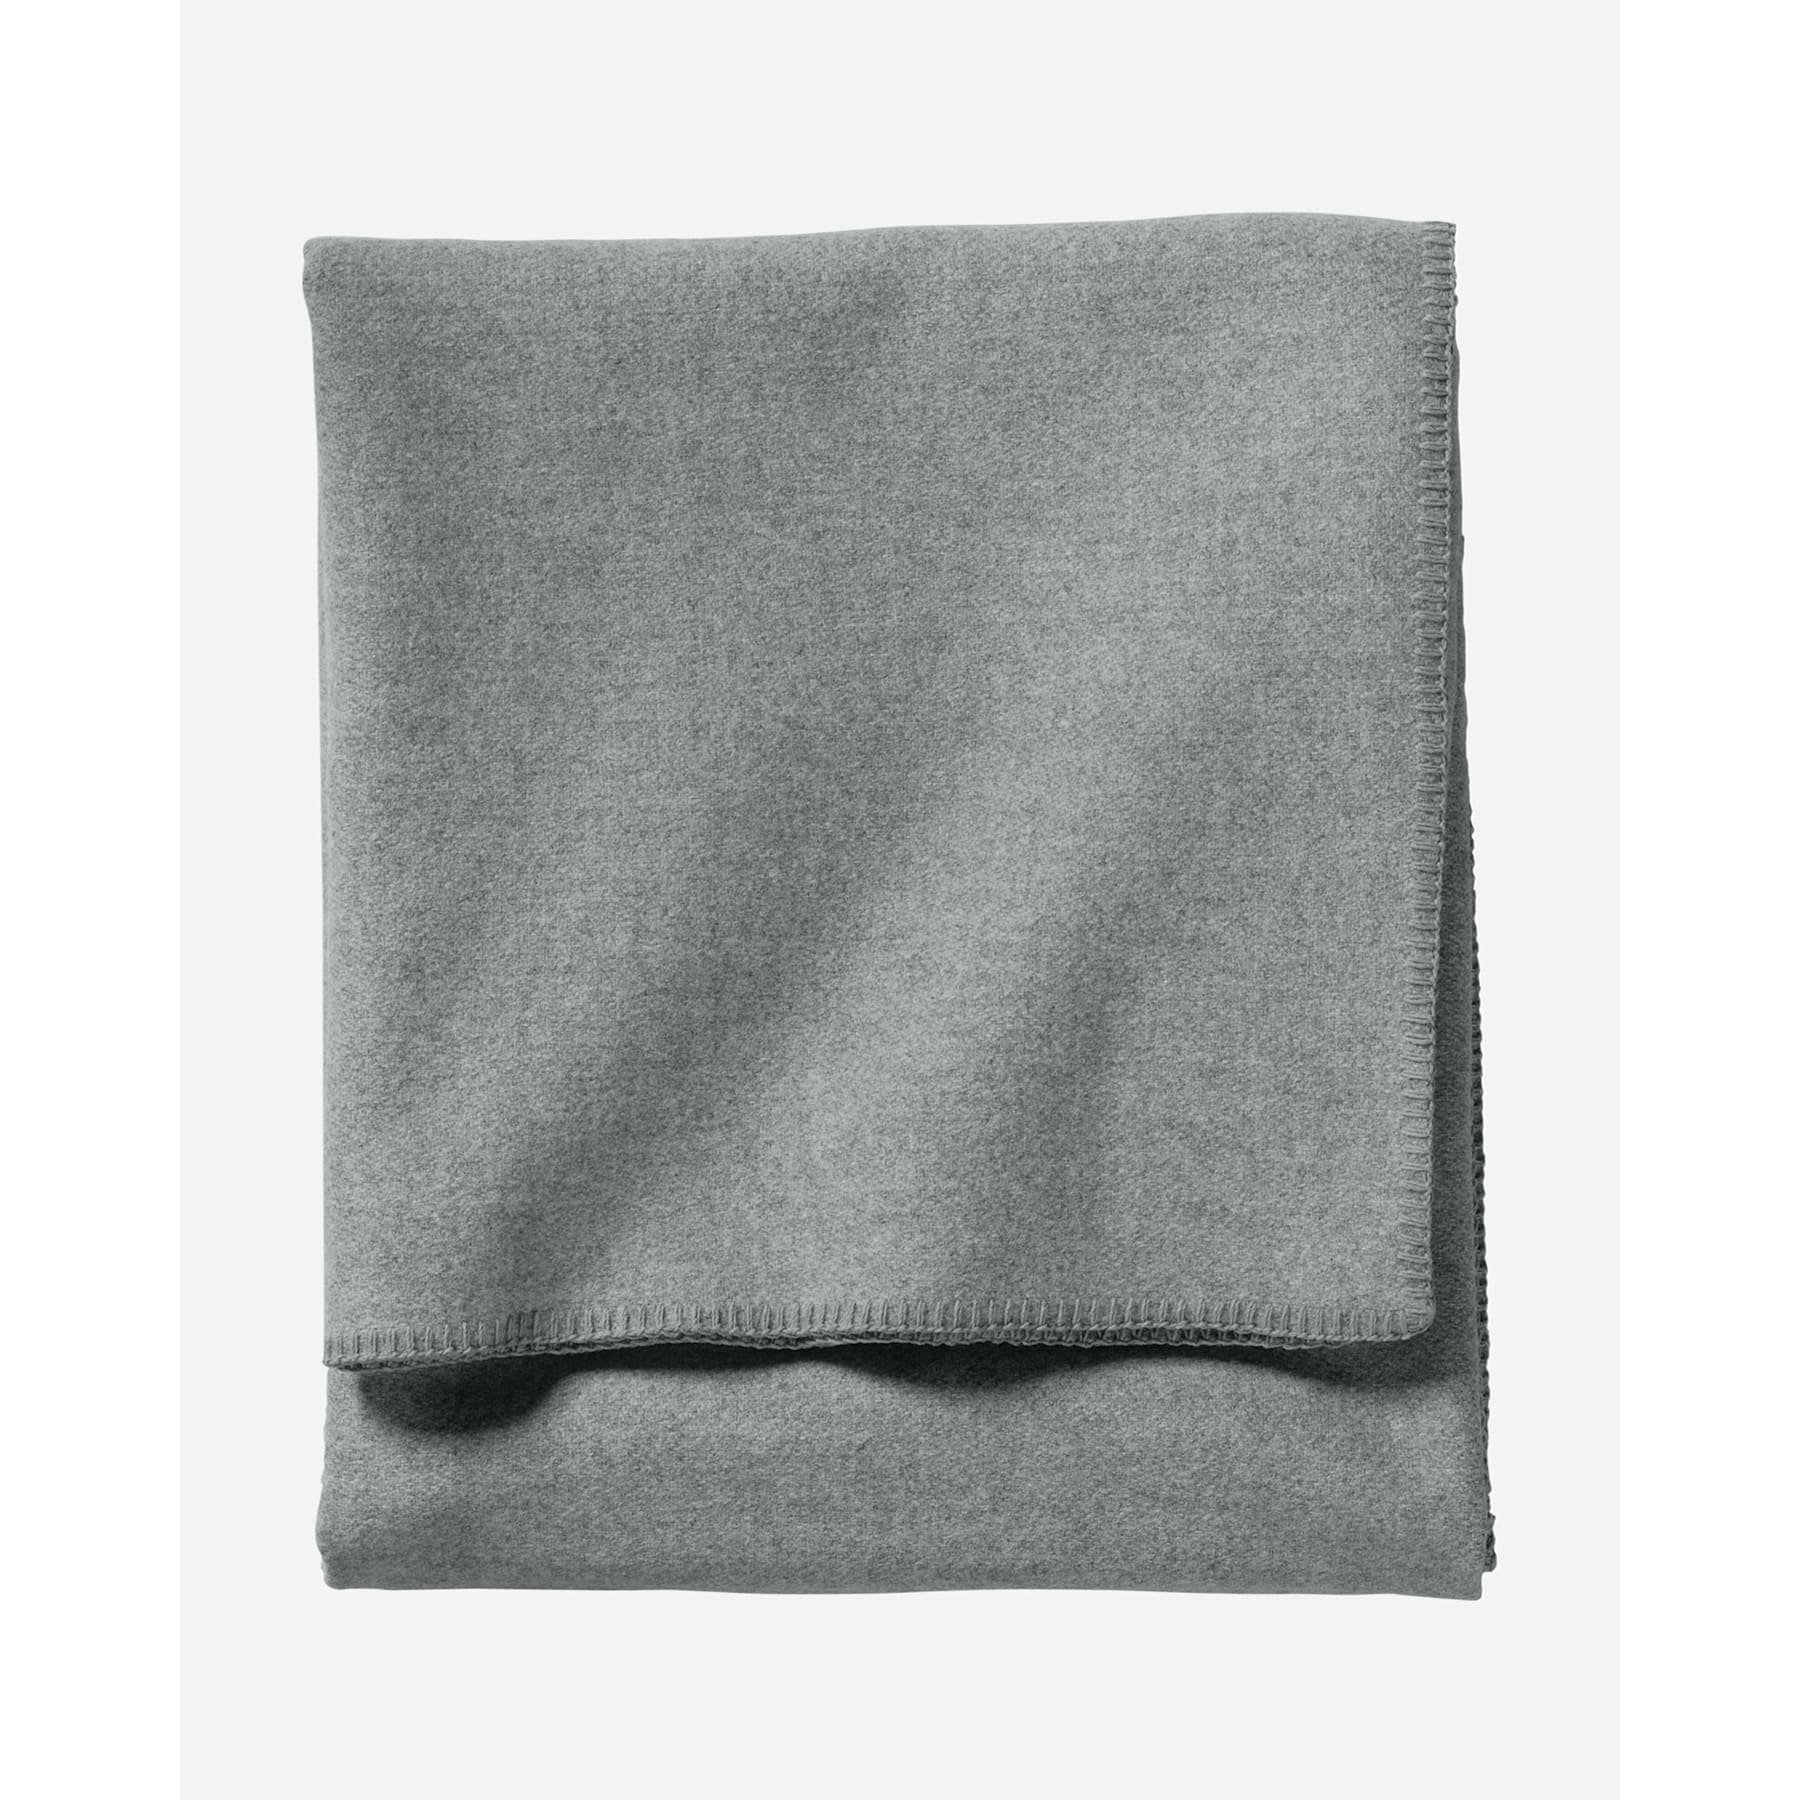 Johnson Woolen Mills gray flannel throw, folded view